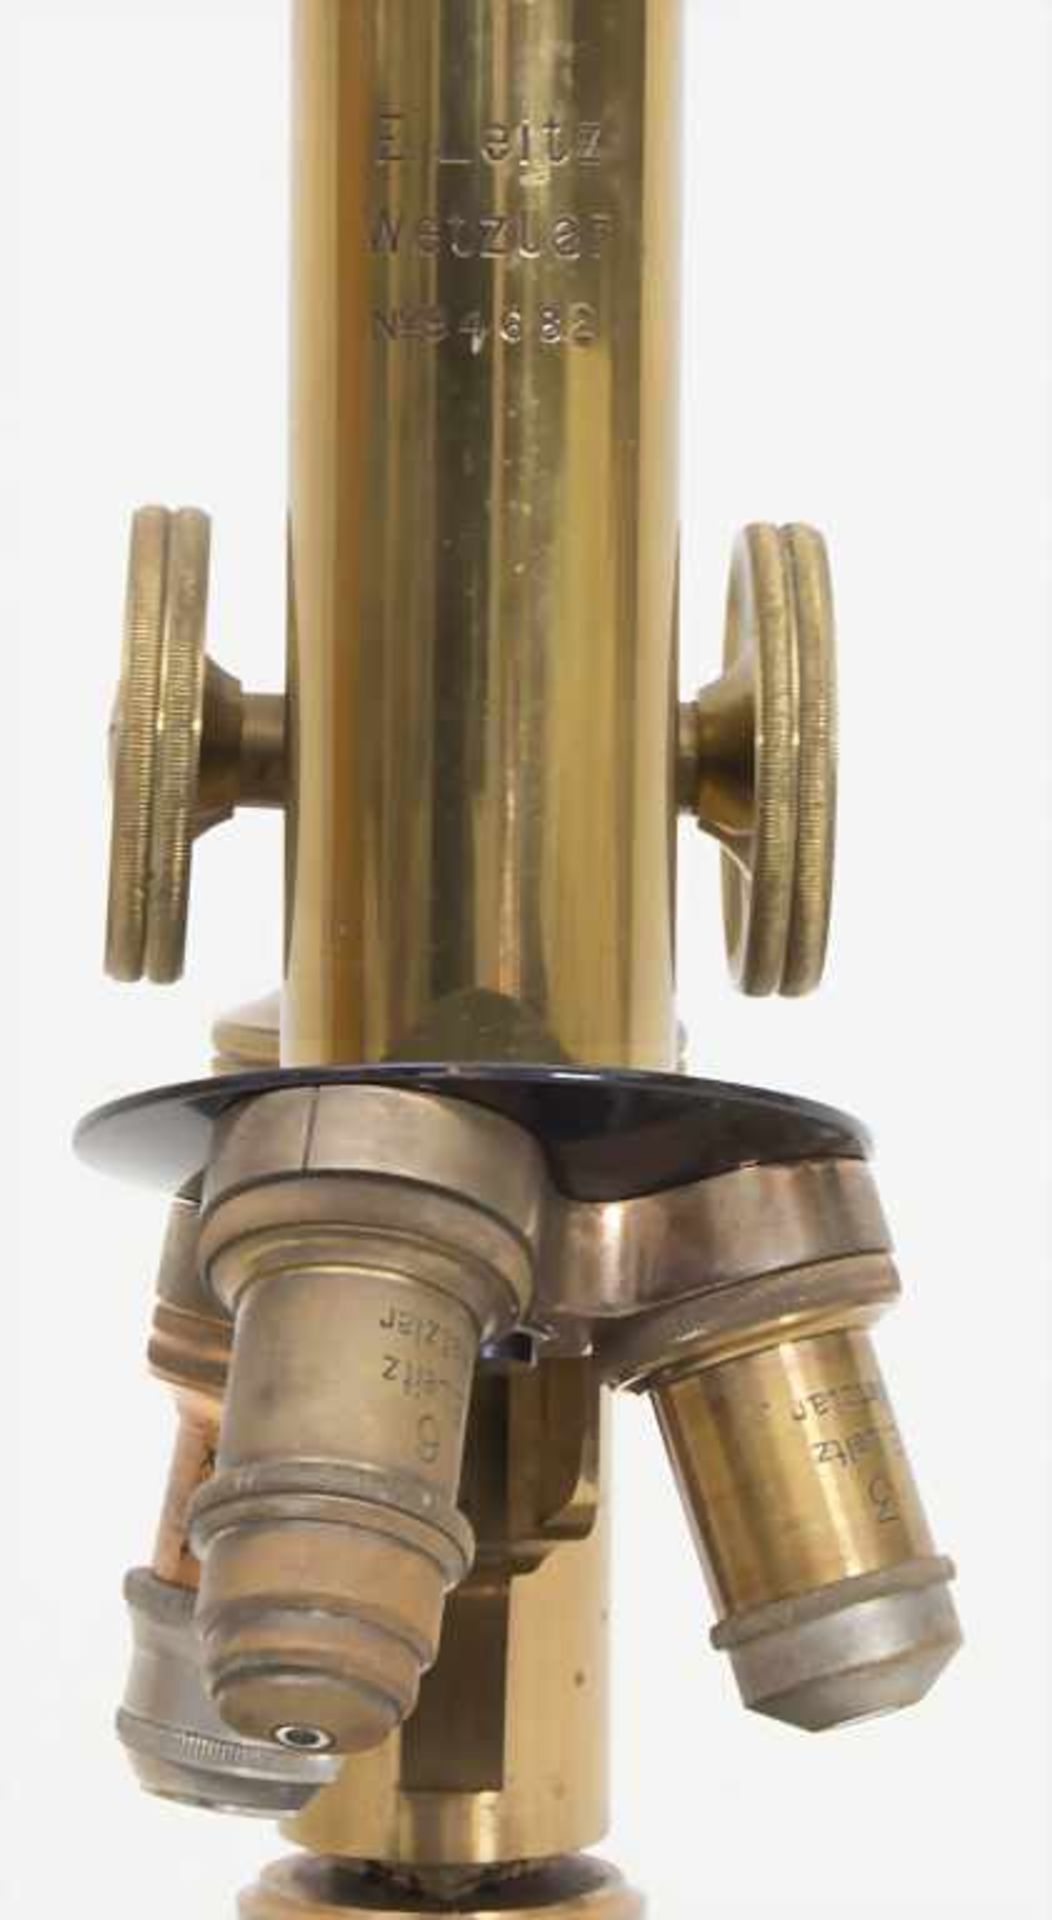 Mikroskop / A microscope, E. Leitz, WetzlarMaterial: Stativ in Messing schwarz lackiert, Holzkasten, - Bild 8 aus 11